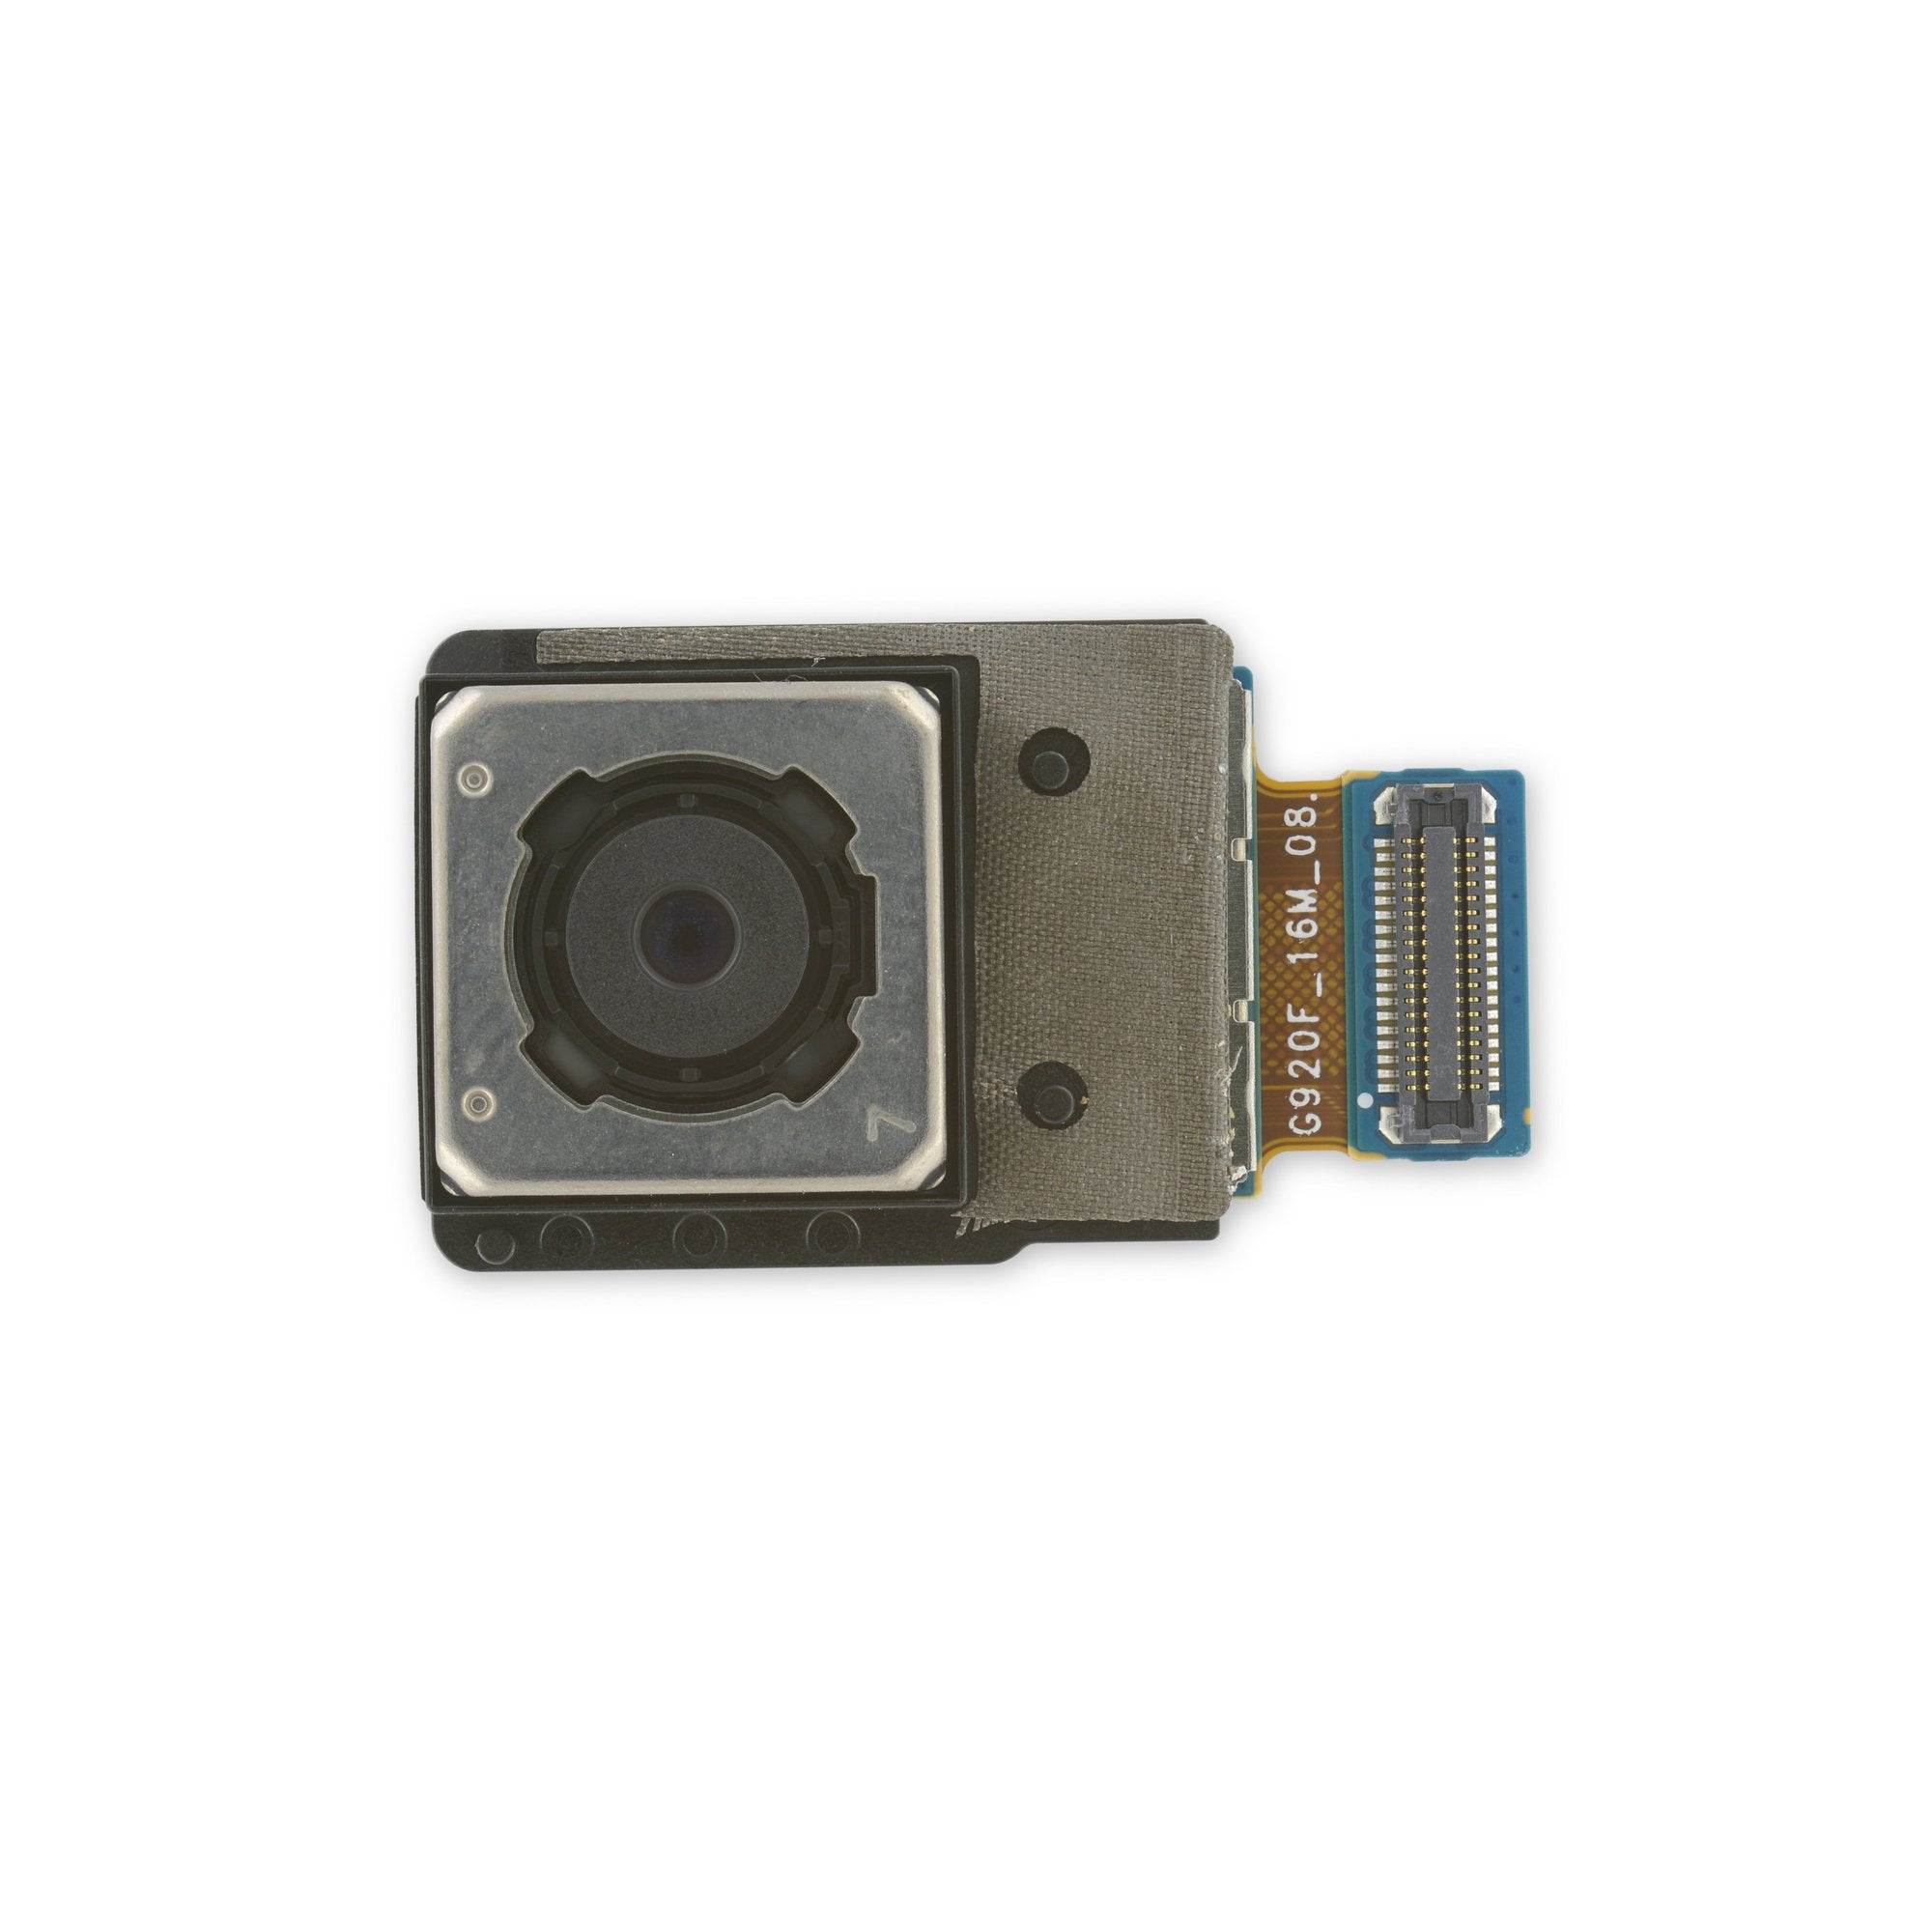 Galaxy Note5 Rear Camera Used